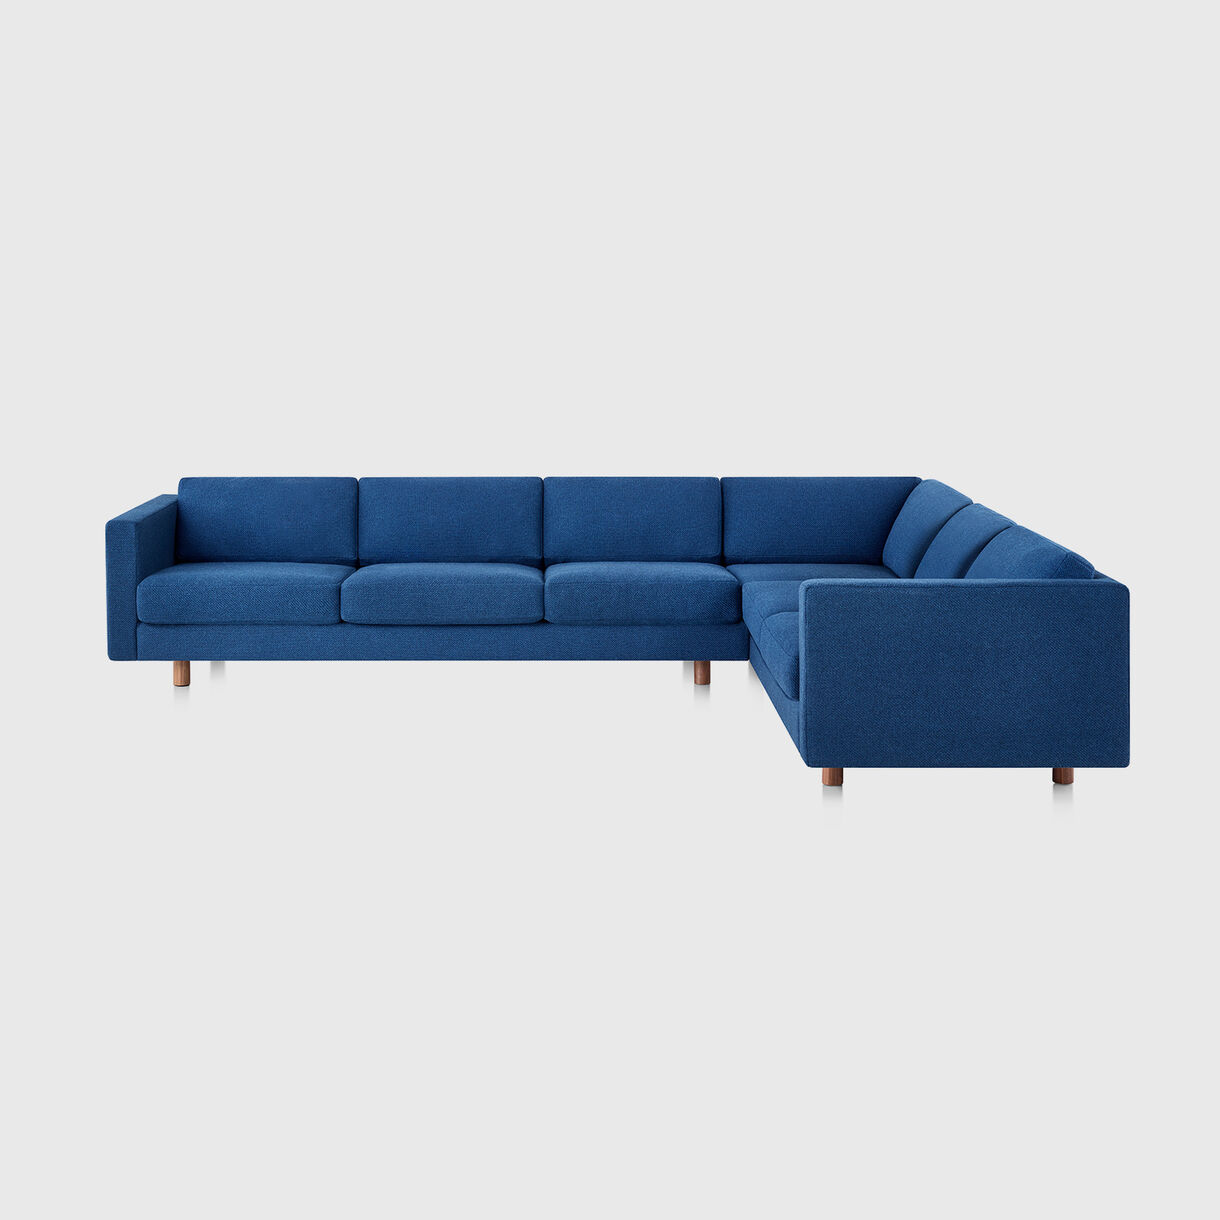 Lispenard Sectional Sofa, Right Configuration, Superweave Marine